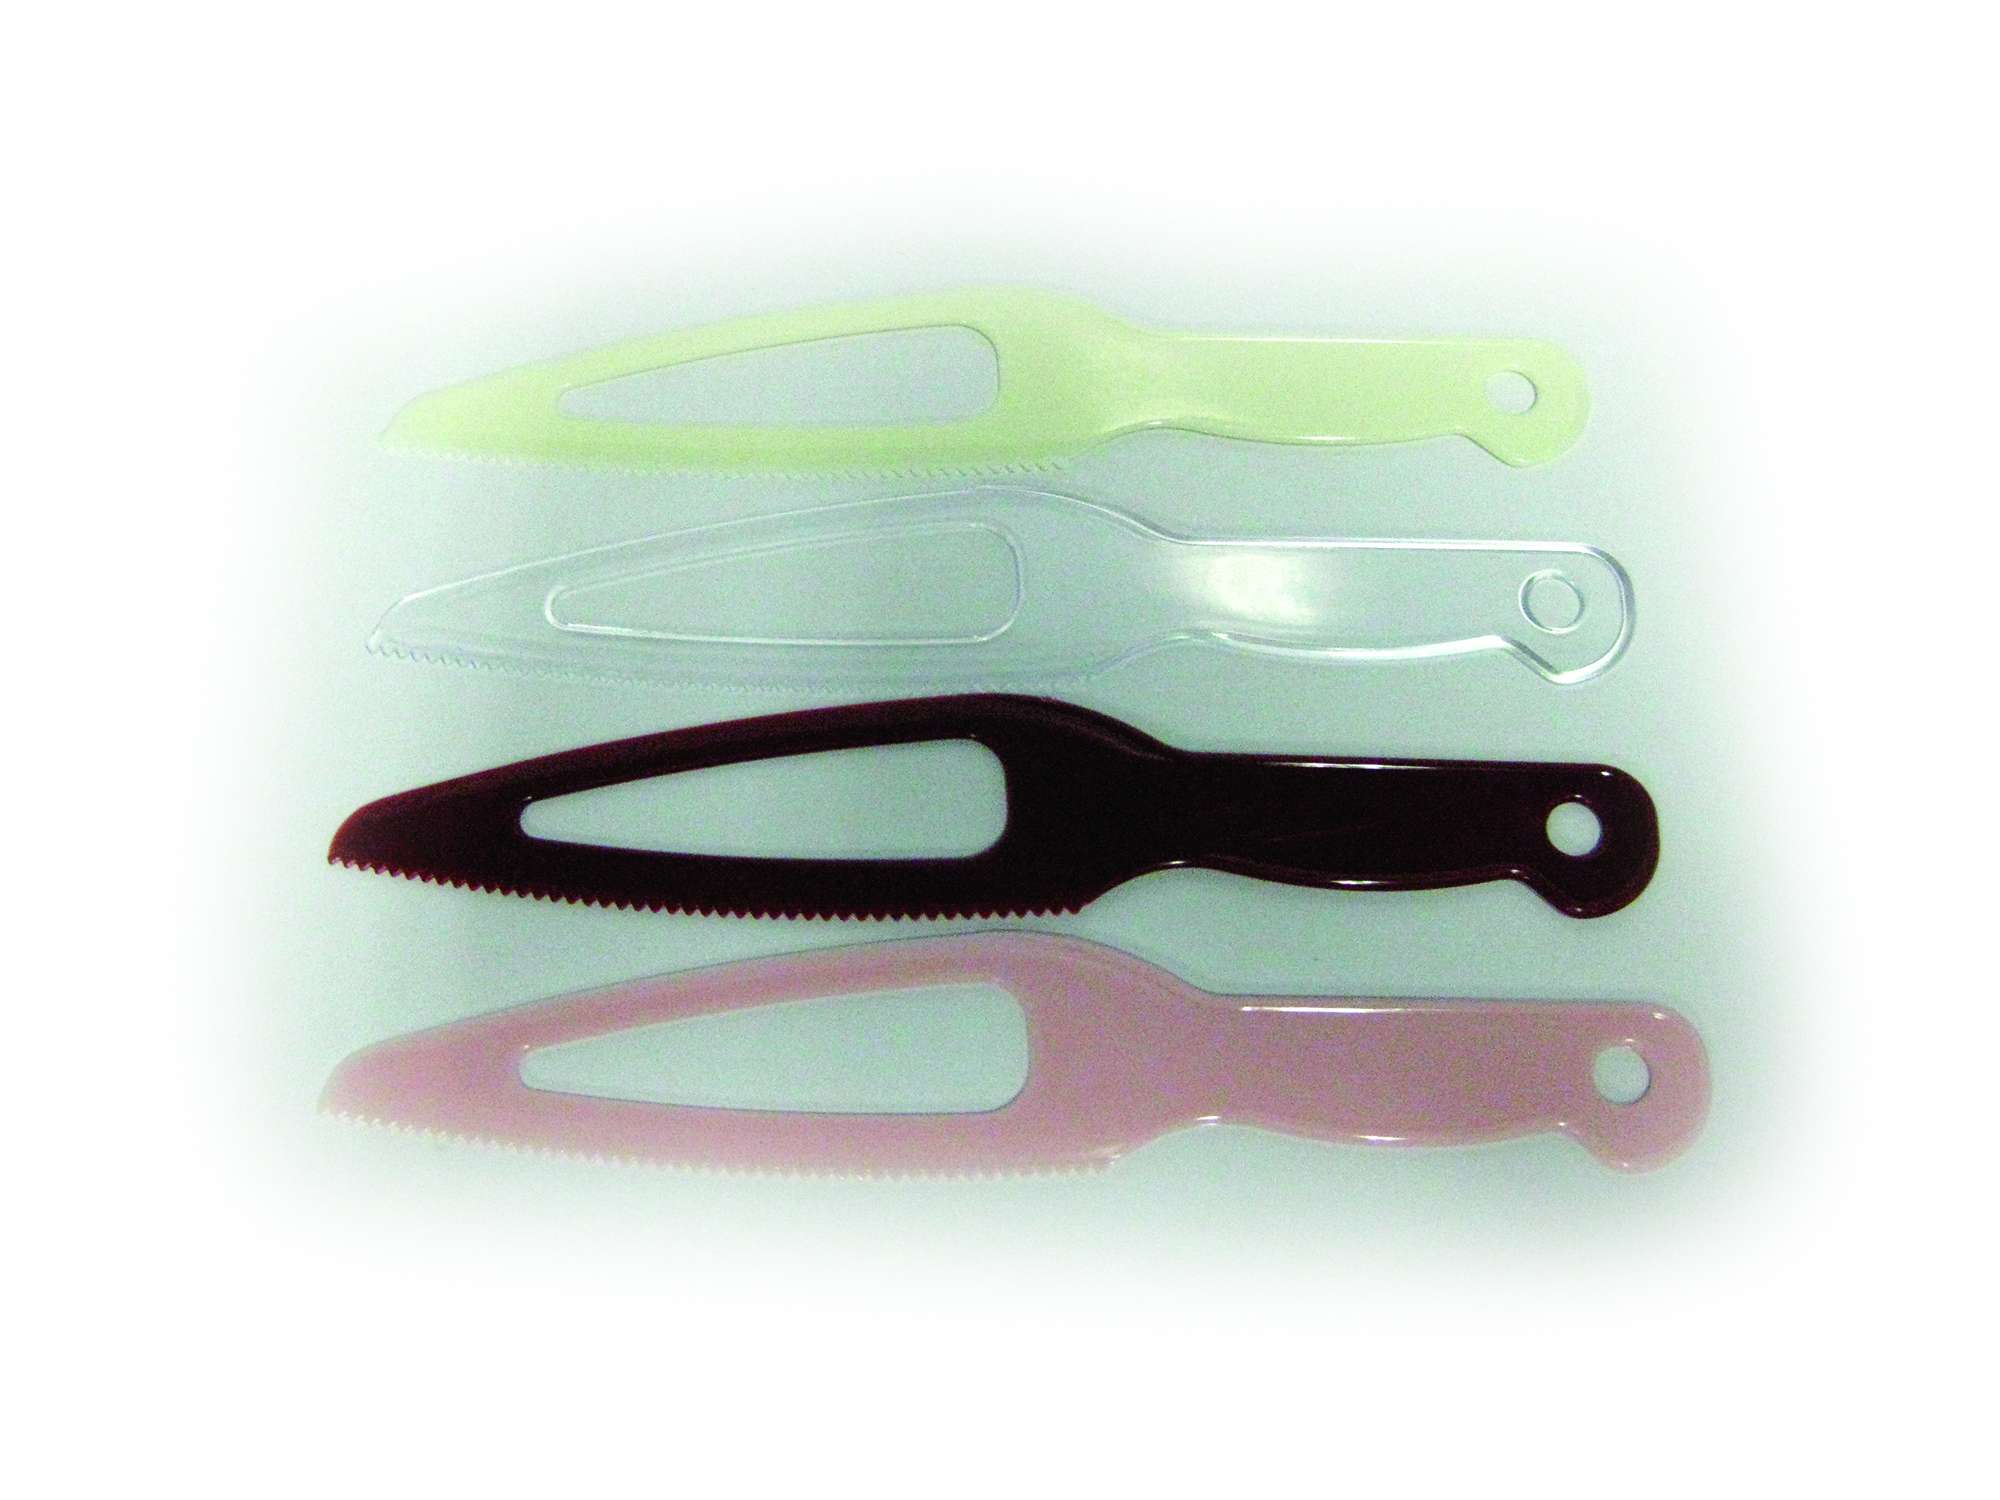 K001 Plastic Knives